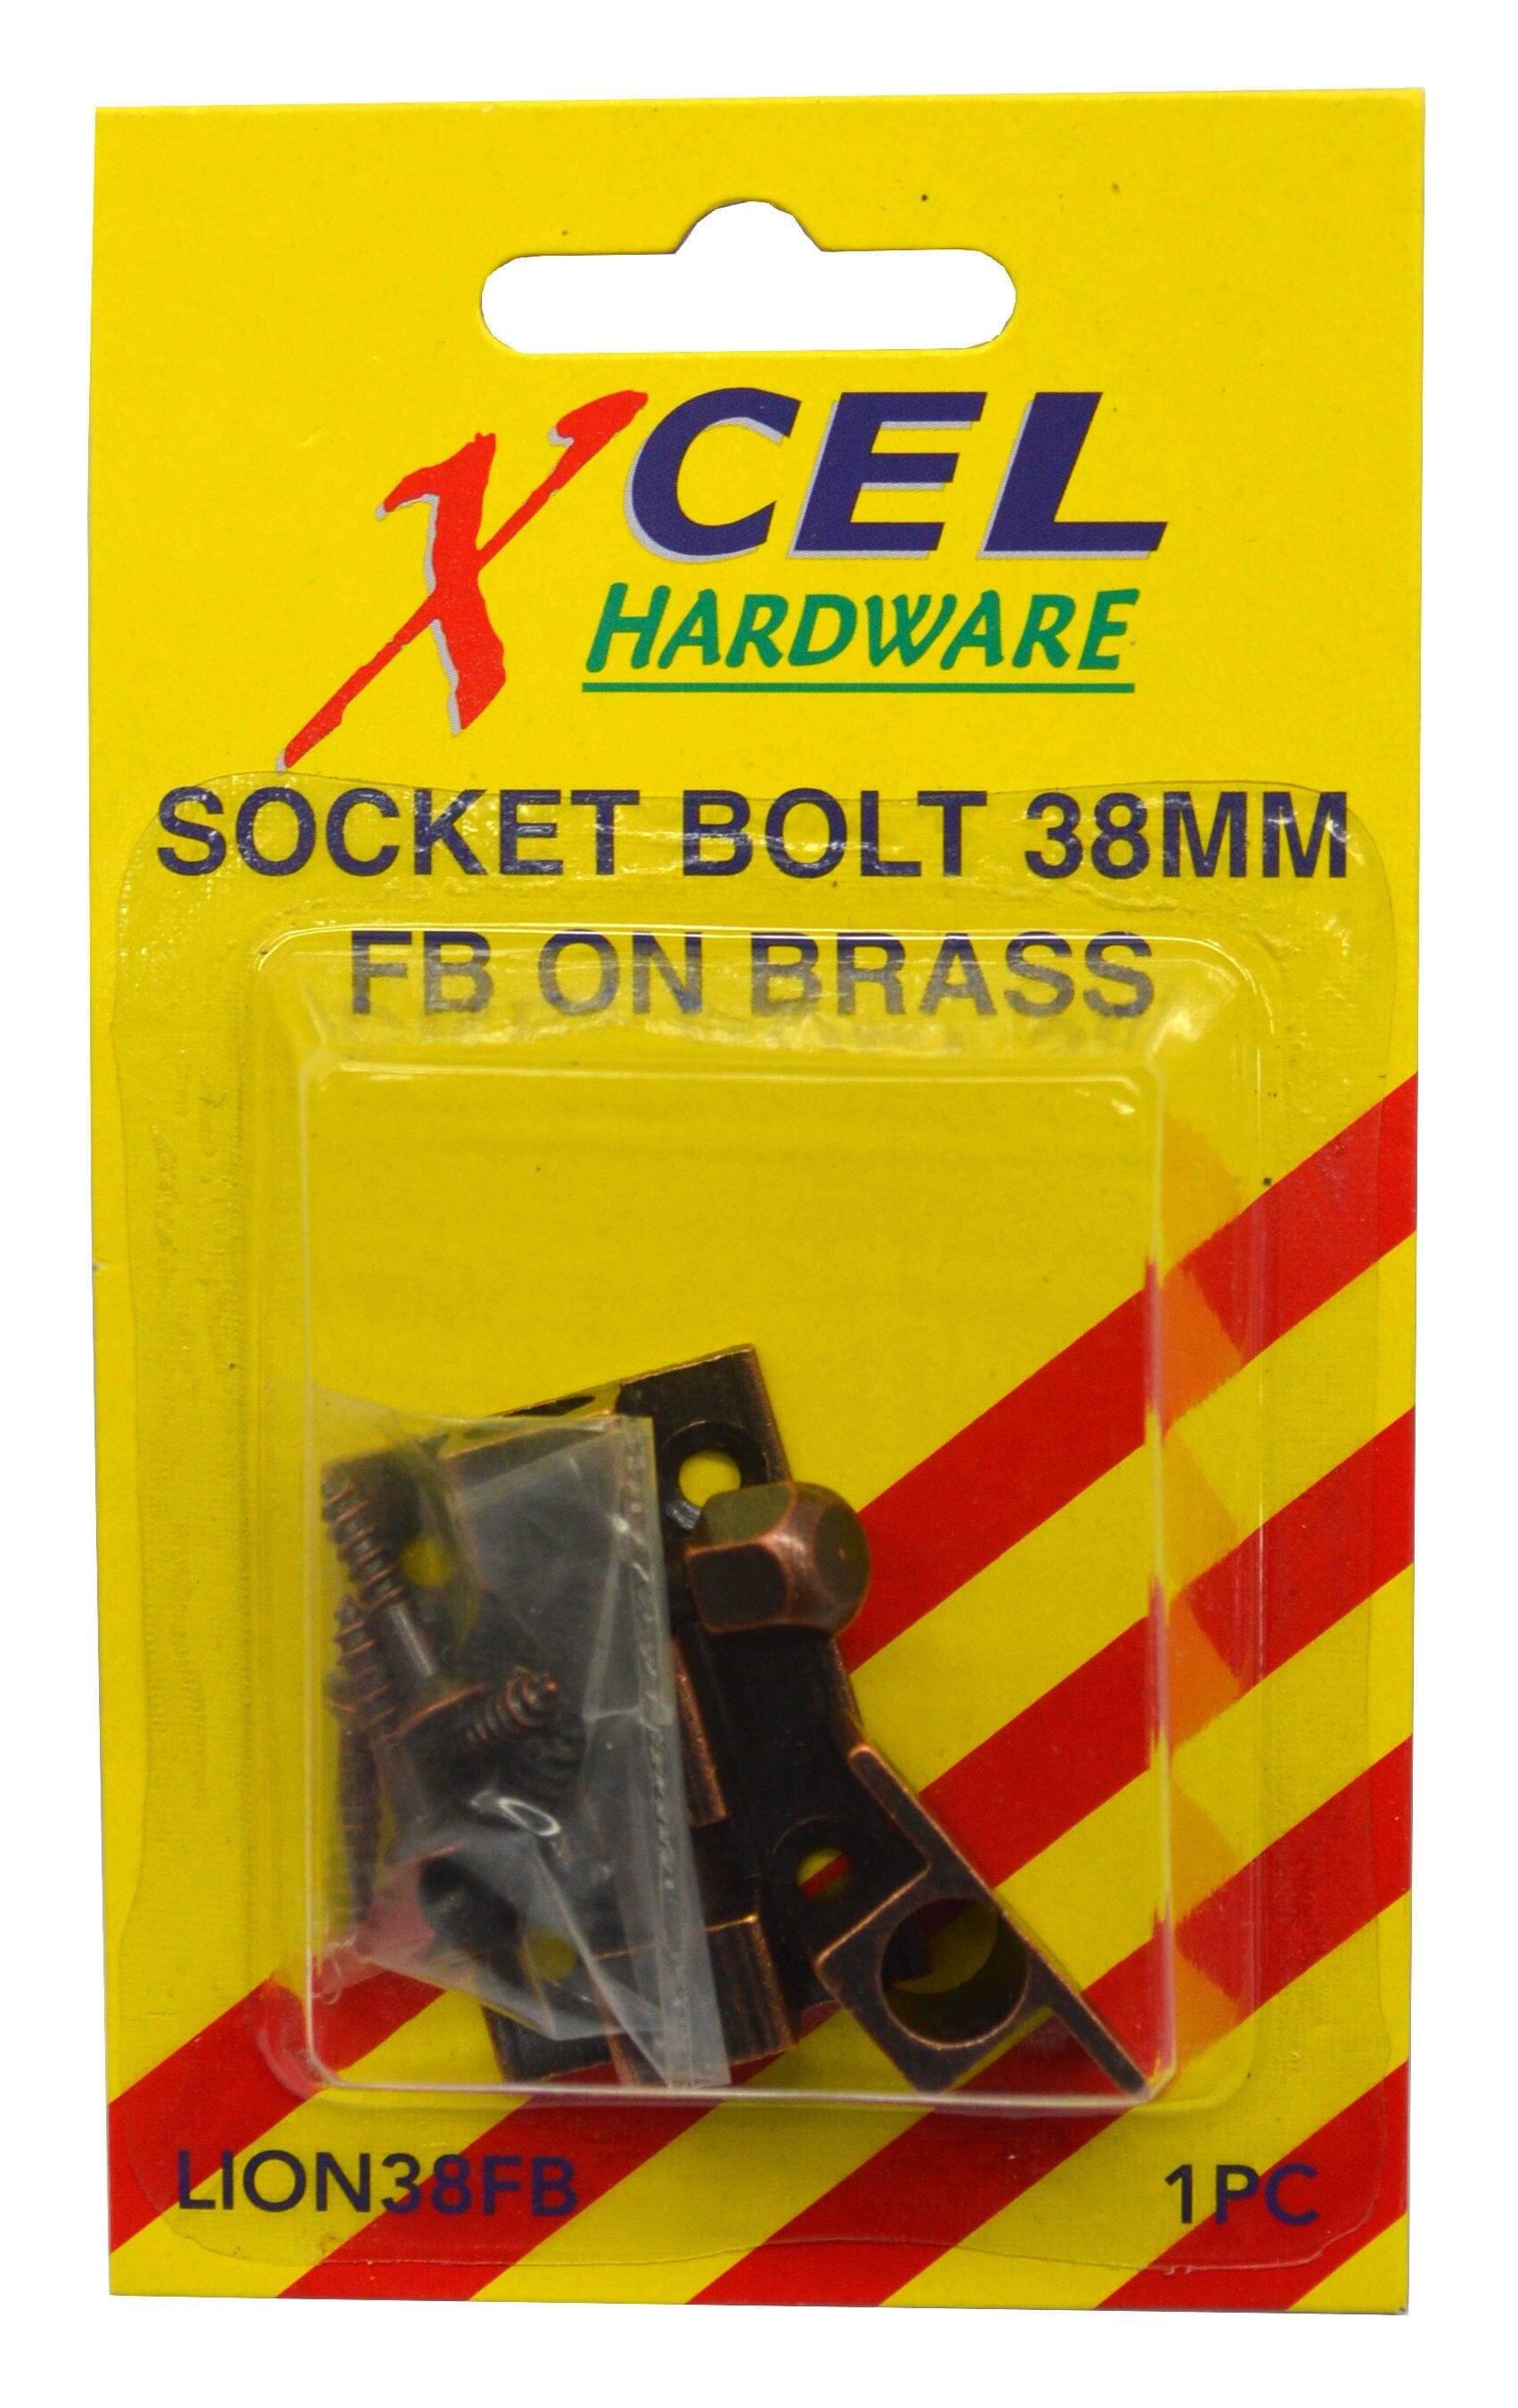 Xcel Socket Bolt - FB on Brass 38mm Carded